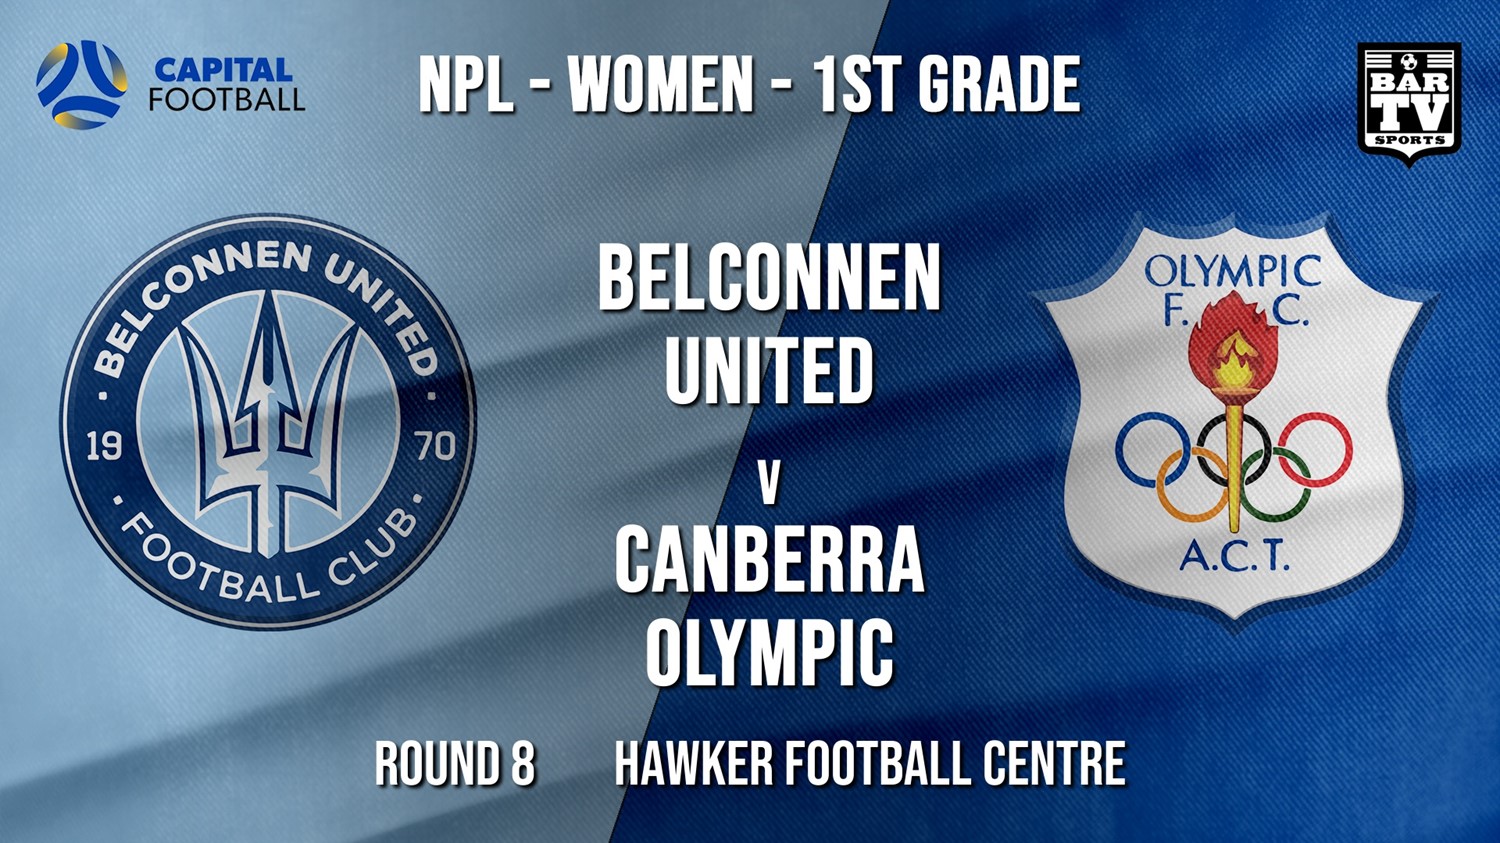 NPLW - Capital Round 8 - Belconnen United (women) v Canberra Olympic FC (women) Minigame Slate Image